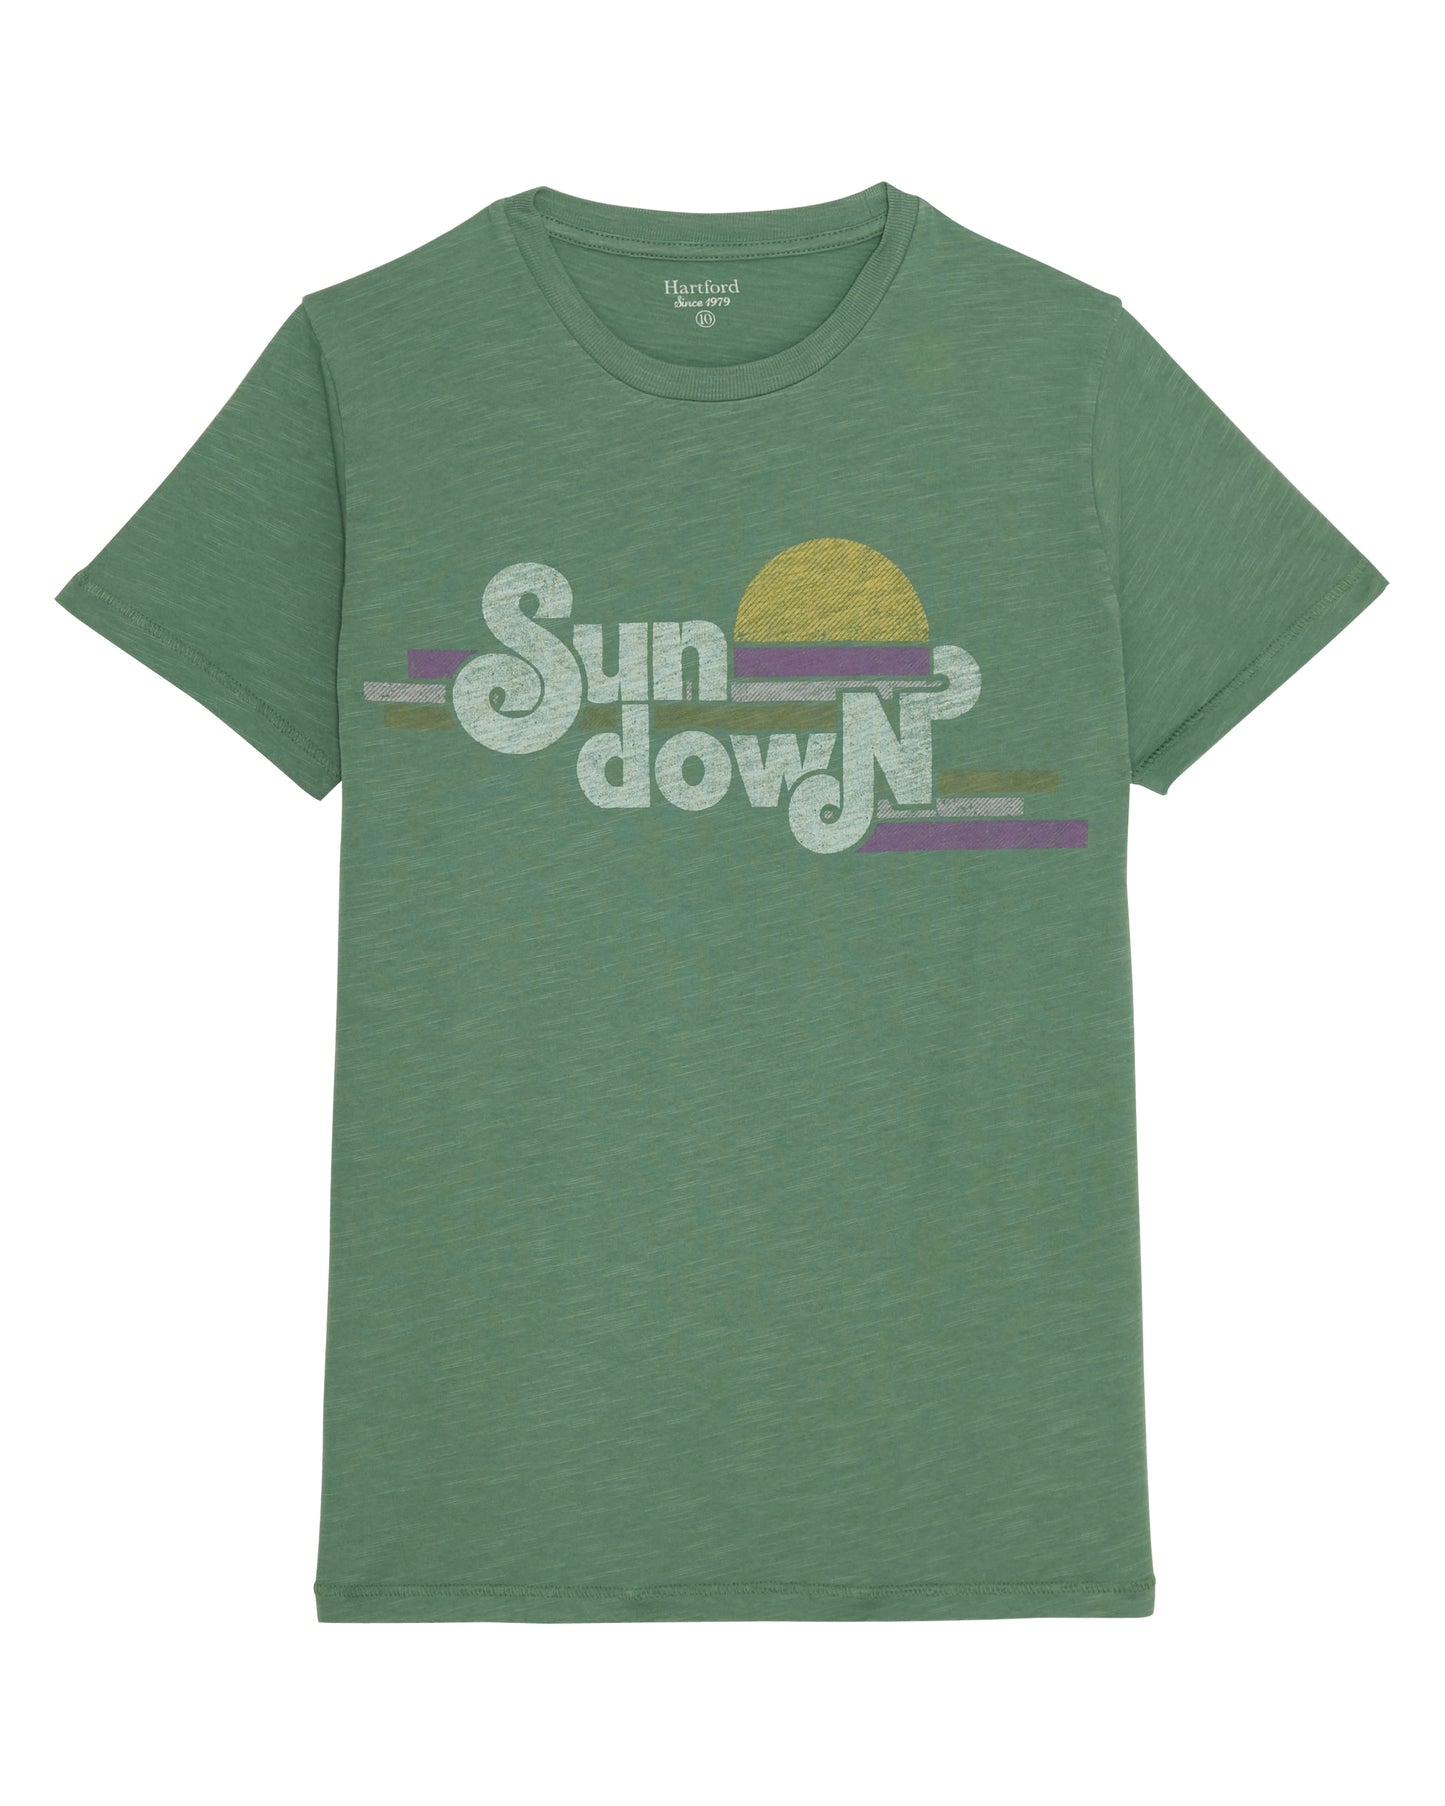 Boys' Mint Sundown Printed Cotton Jersey T-shirt